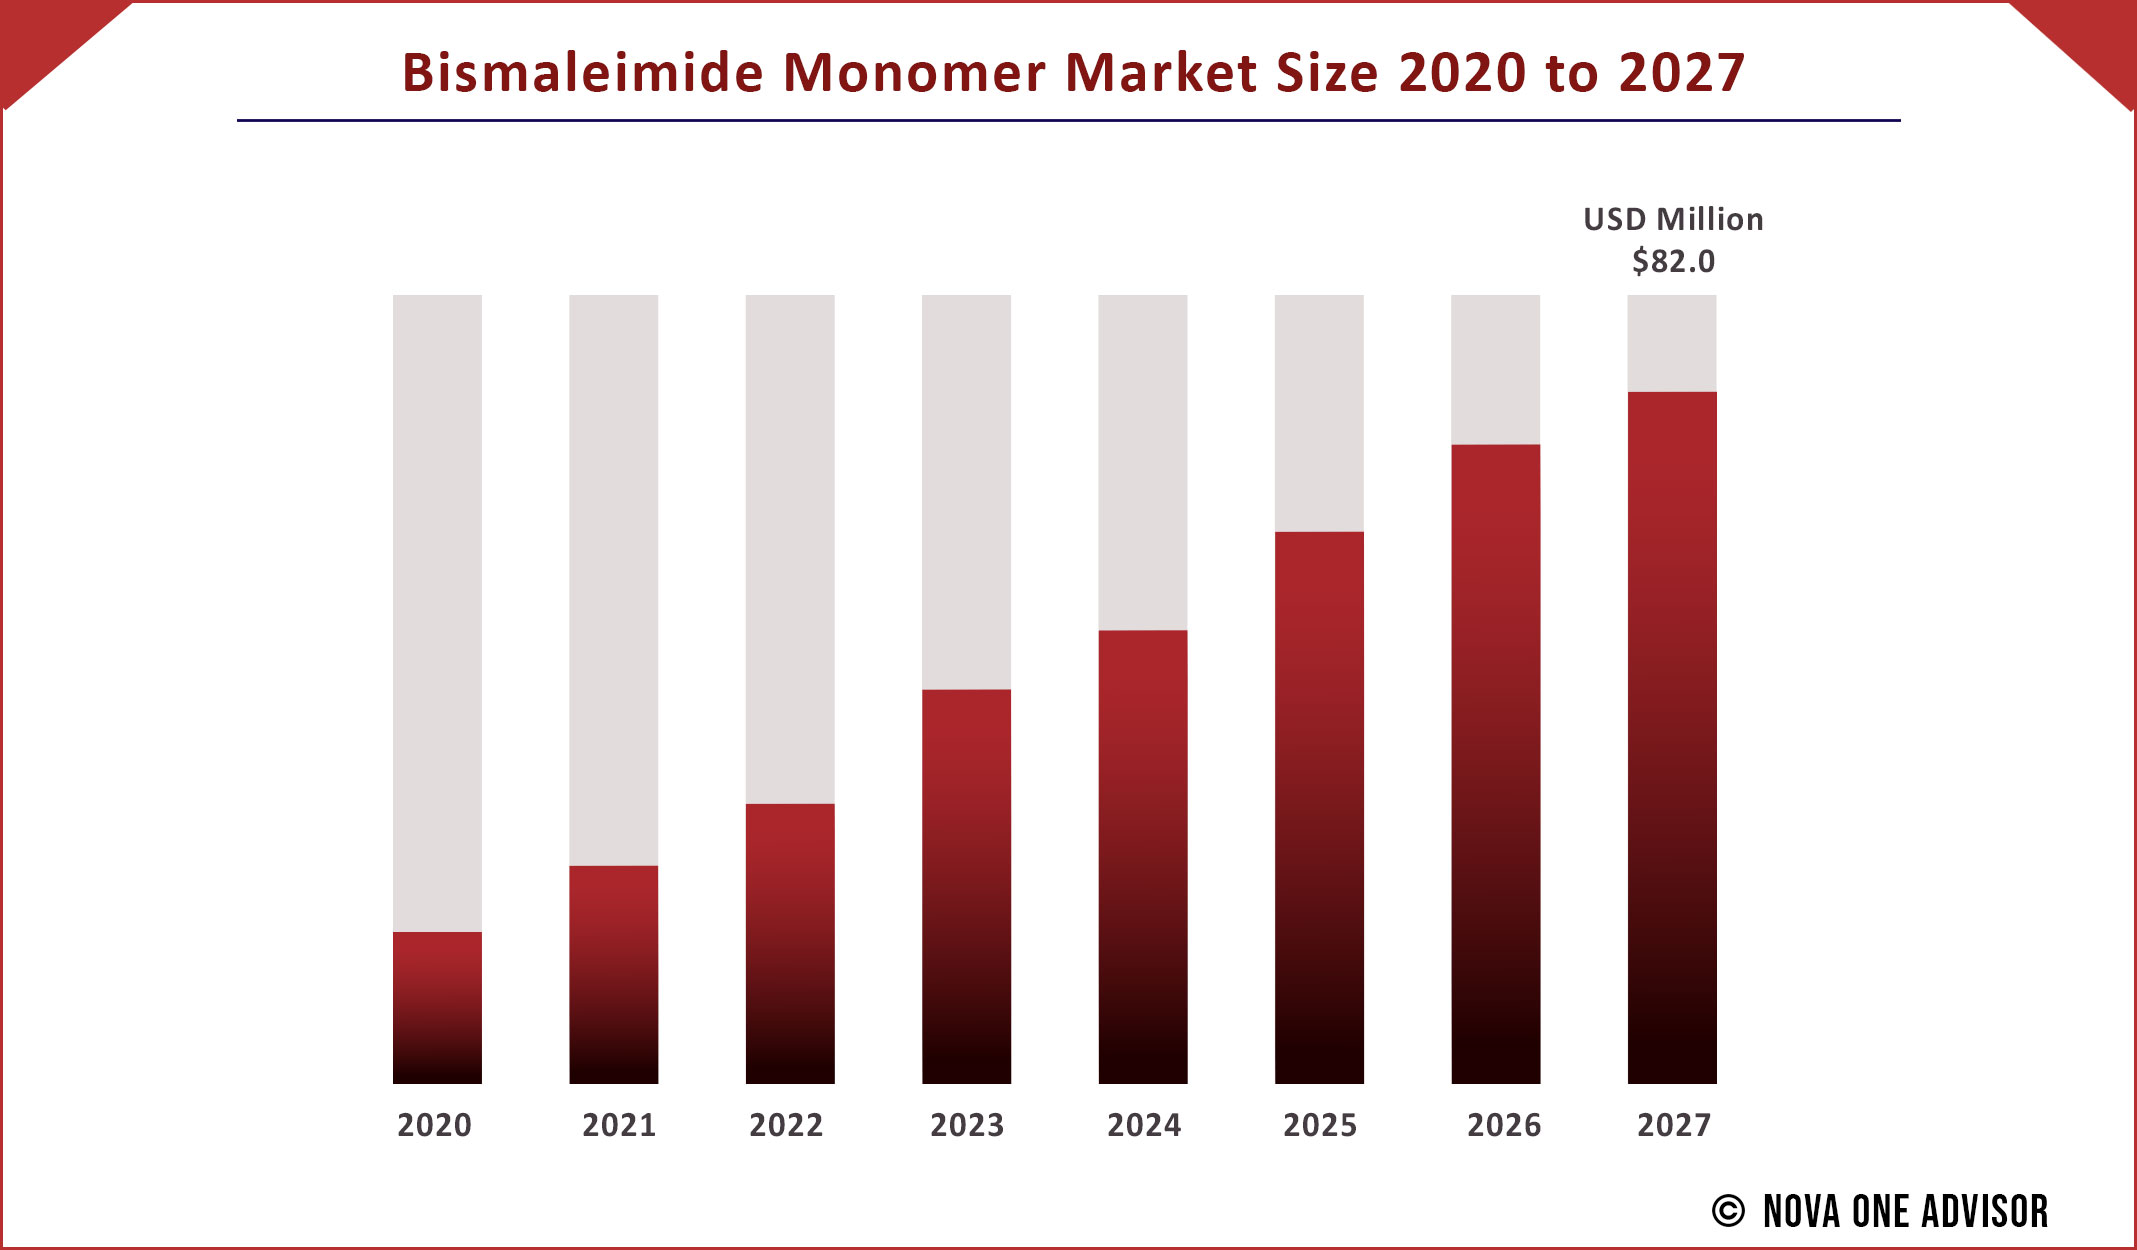 Bismaleimide Monomer Market Size 2020 to 2027